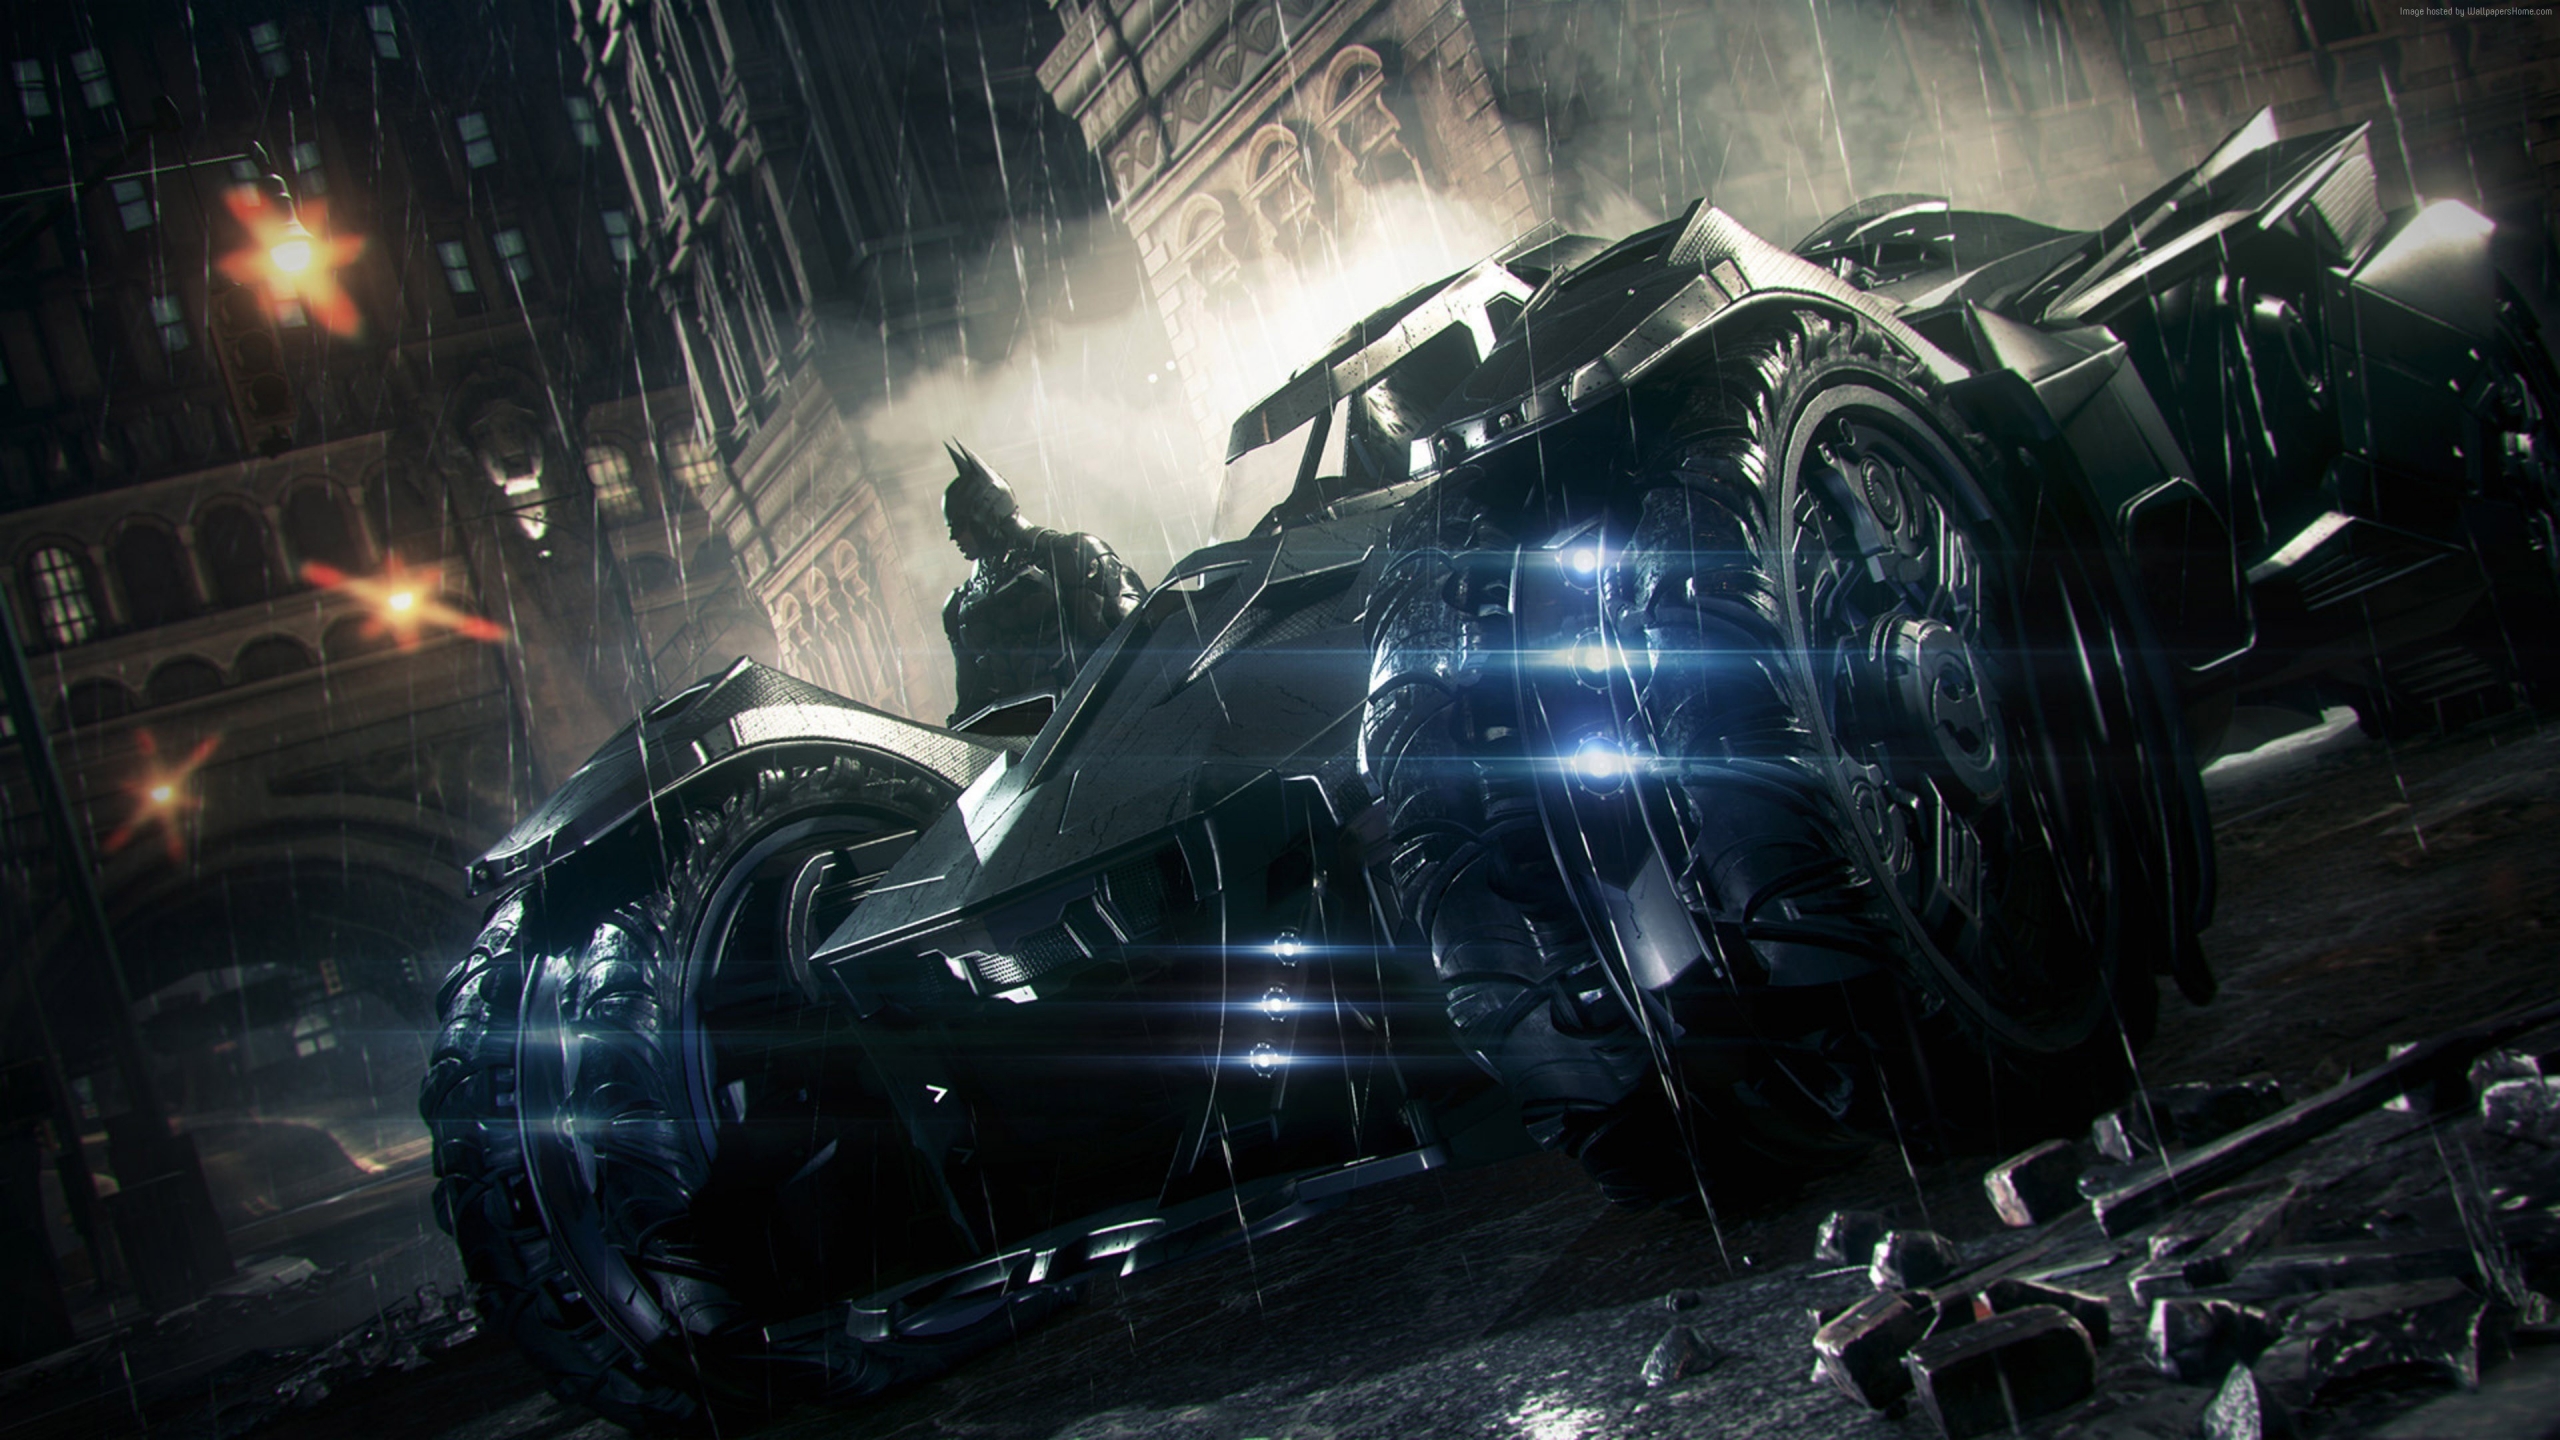 Batman Arkham Knight 3 Car for 2560x1440 HDTV resolution